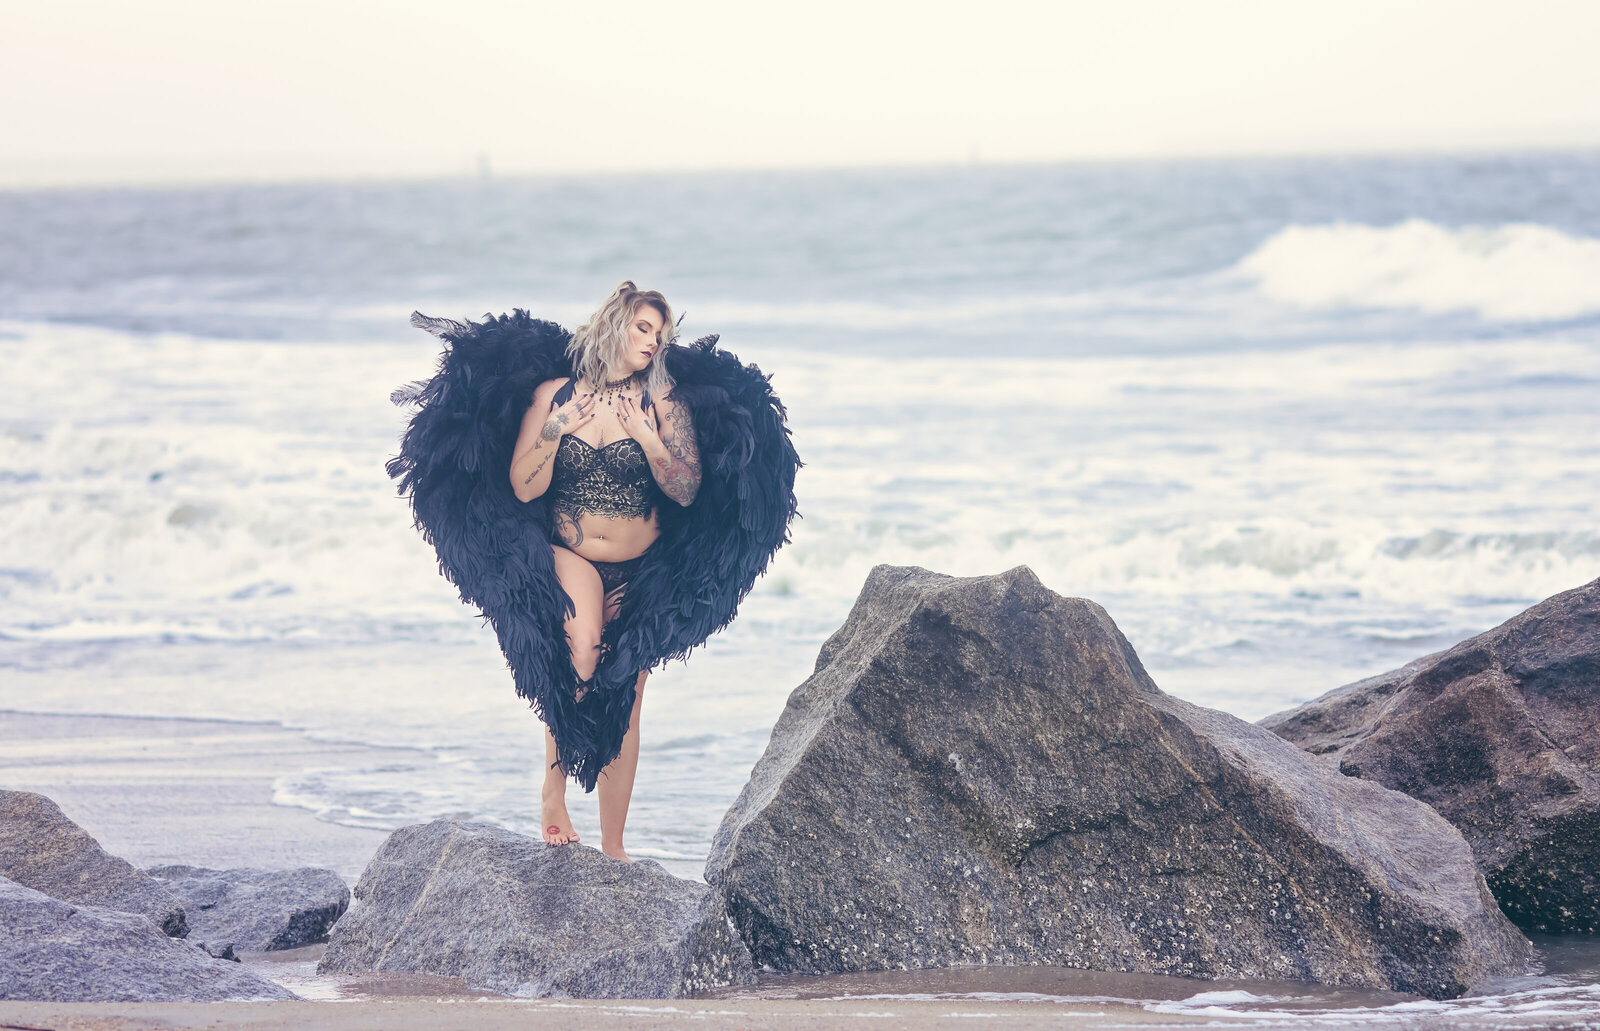 Woman on beach woth black angel wings in heart shape